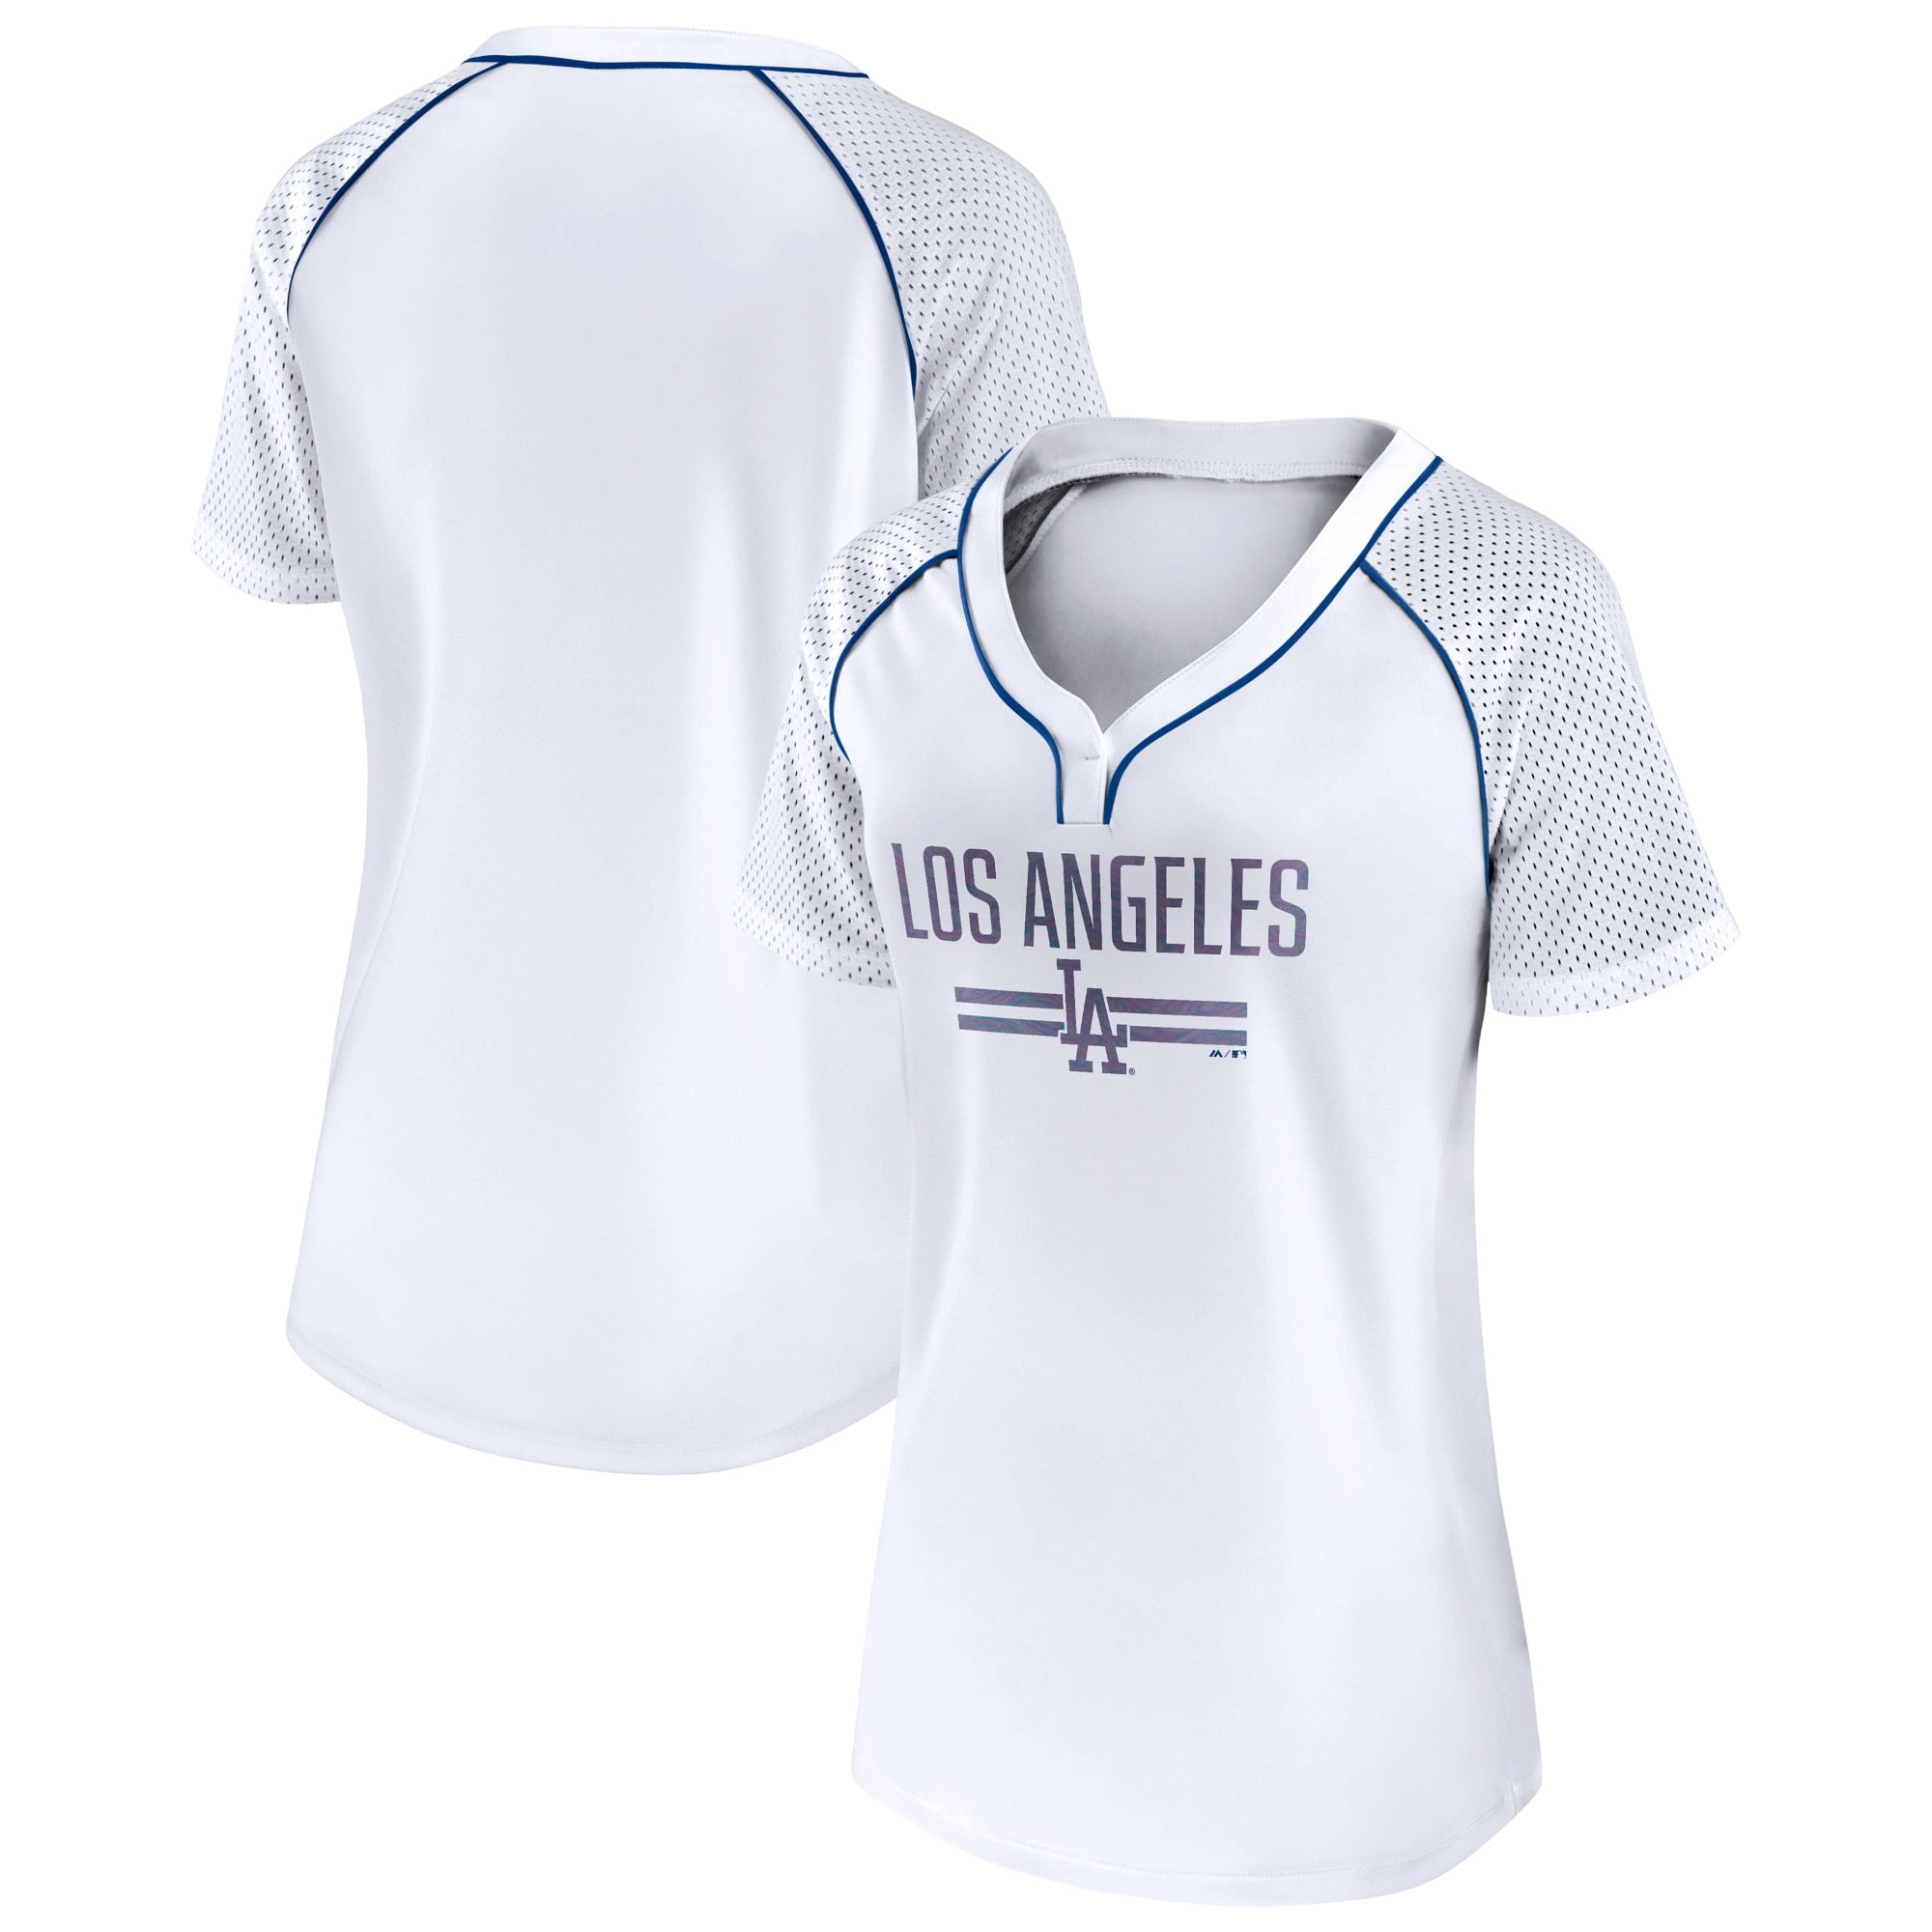 Women's Fanatics Branded White Los Angeles Dodgers Play Calling Raglan V- Neck T-Shirt 